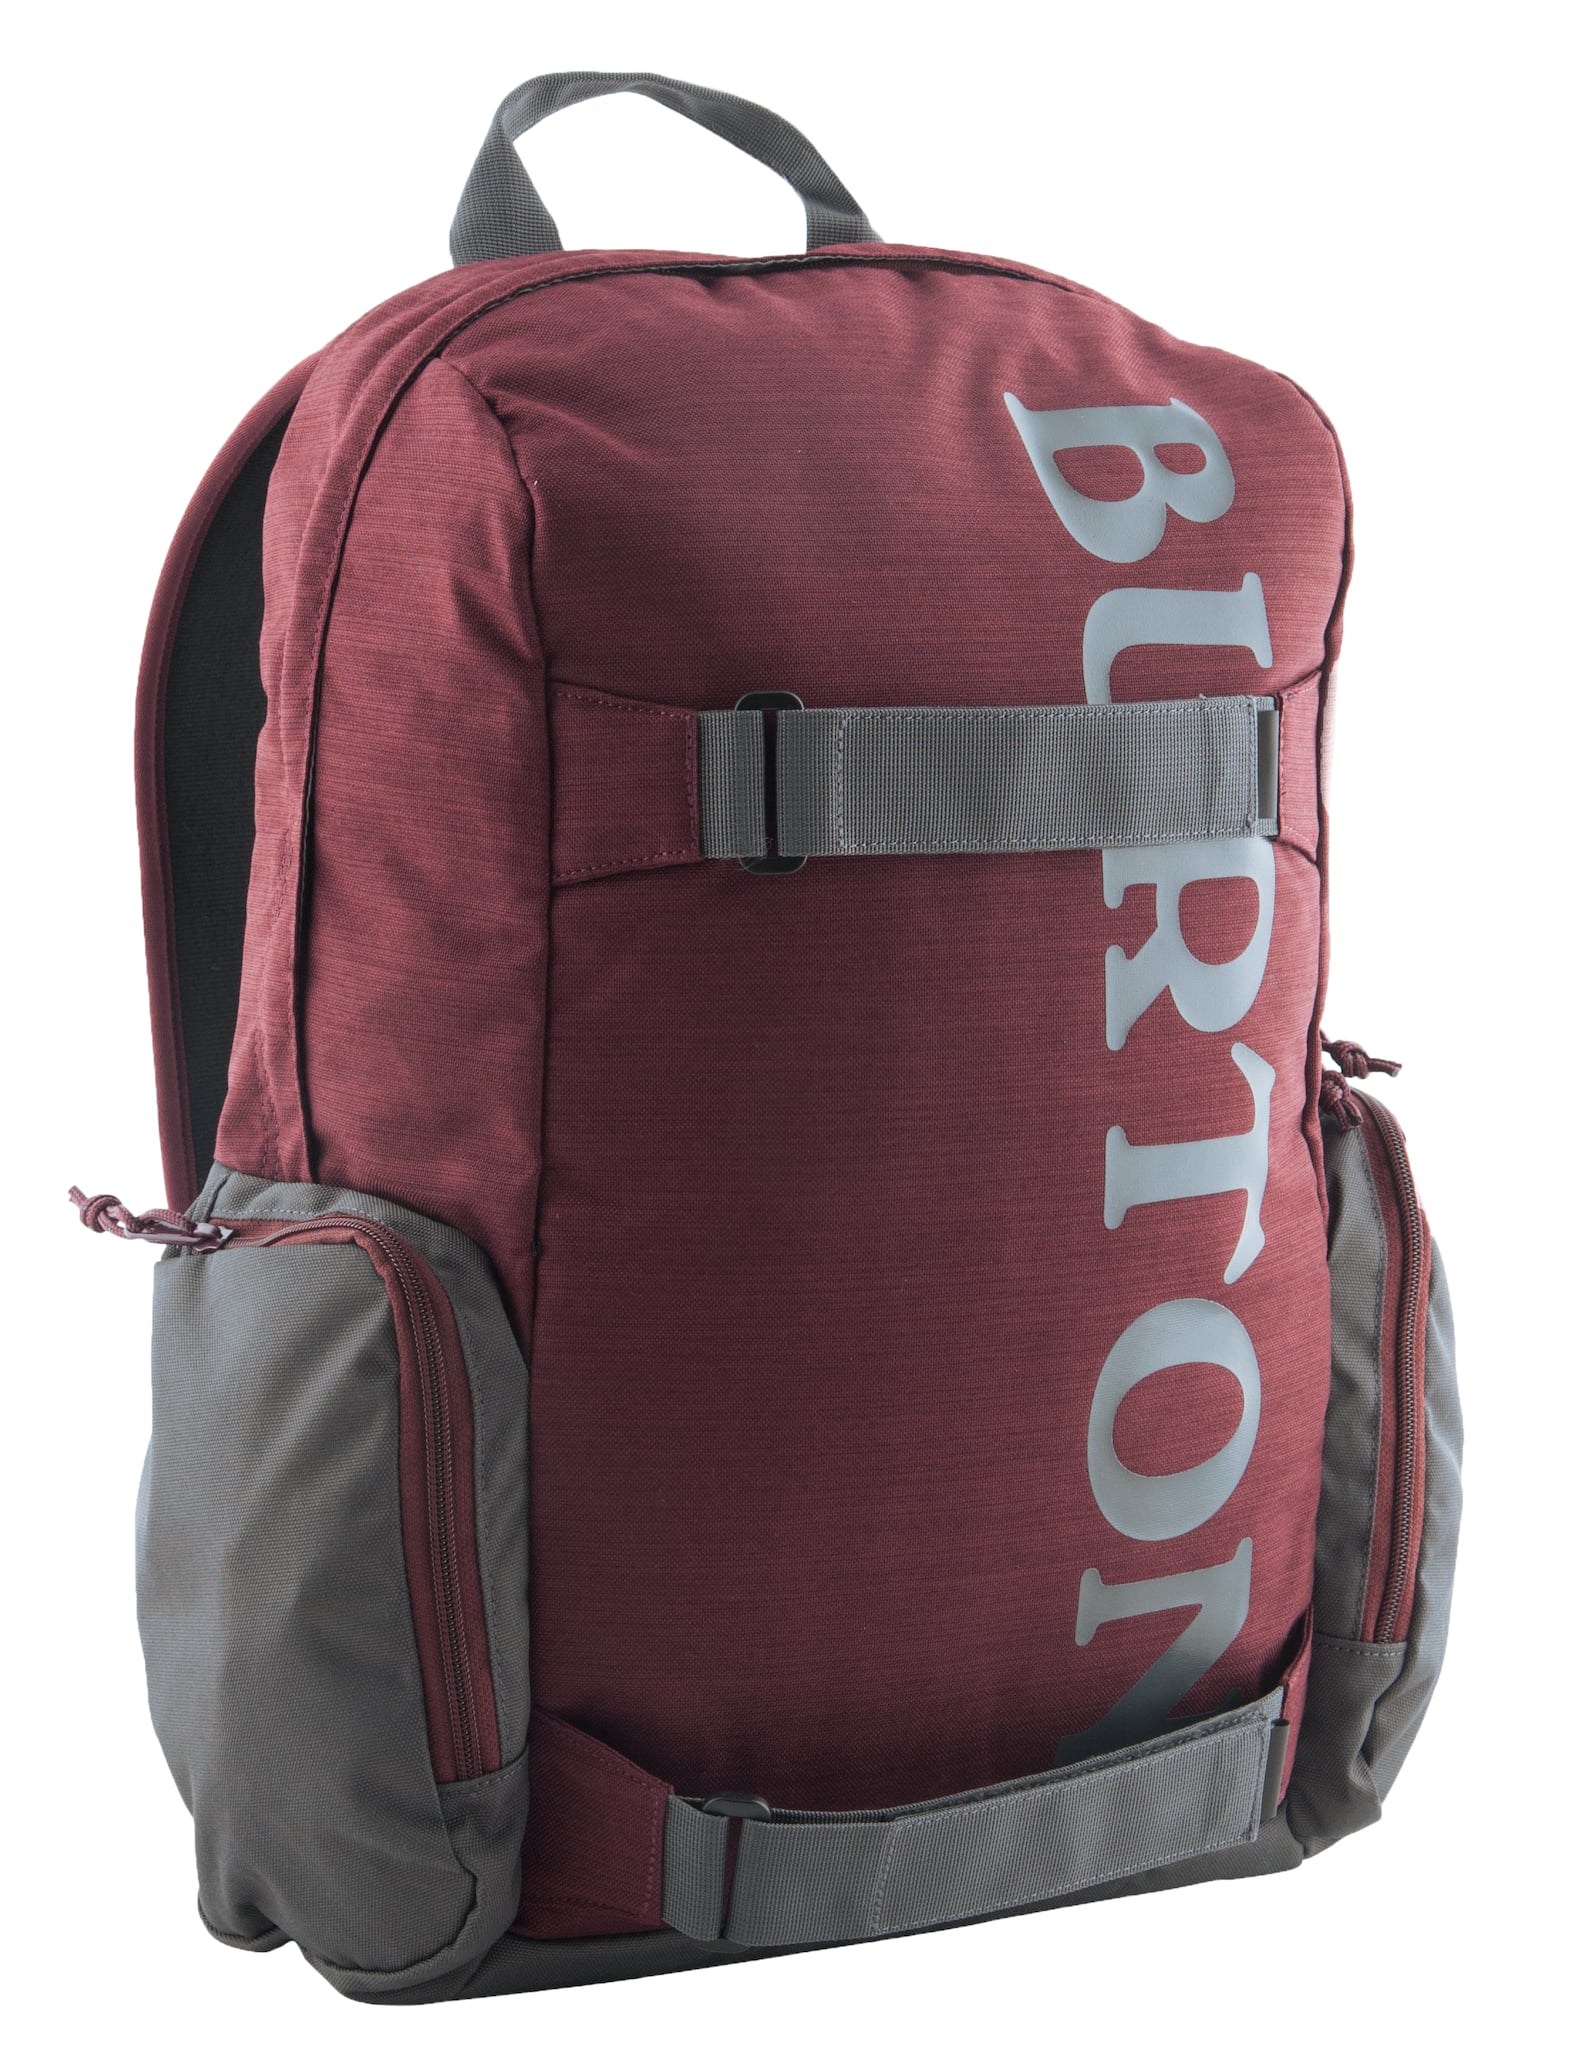 Burton Emphasis 26L Backpack | Burton.com Spring 2020 CH